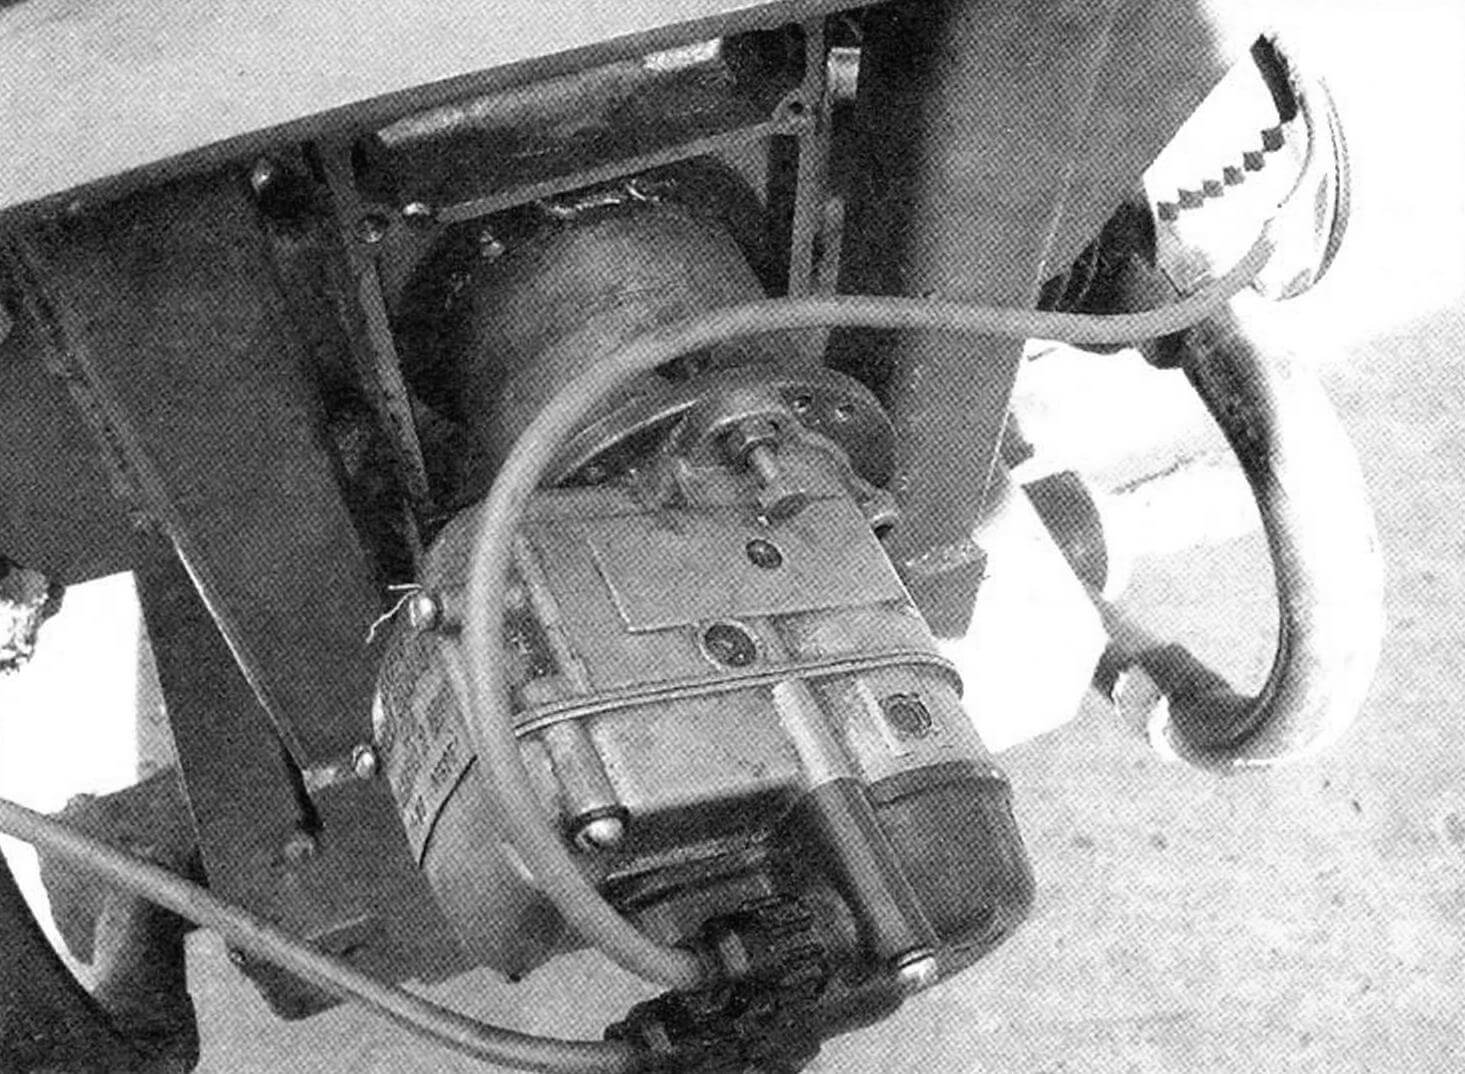 Магнето (закреплено на картере двигателя через барабан-переходник) с приводом от распредвала